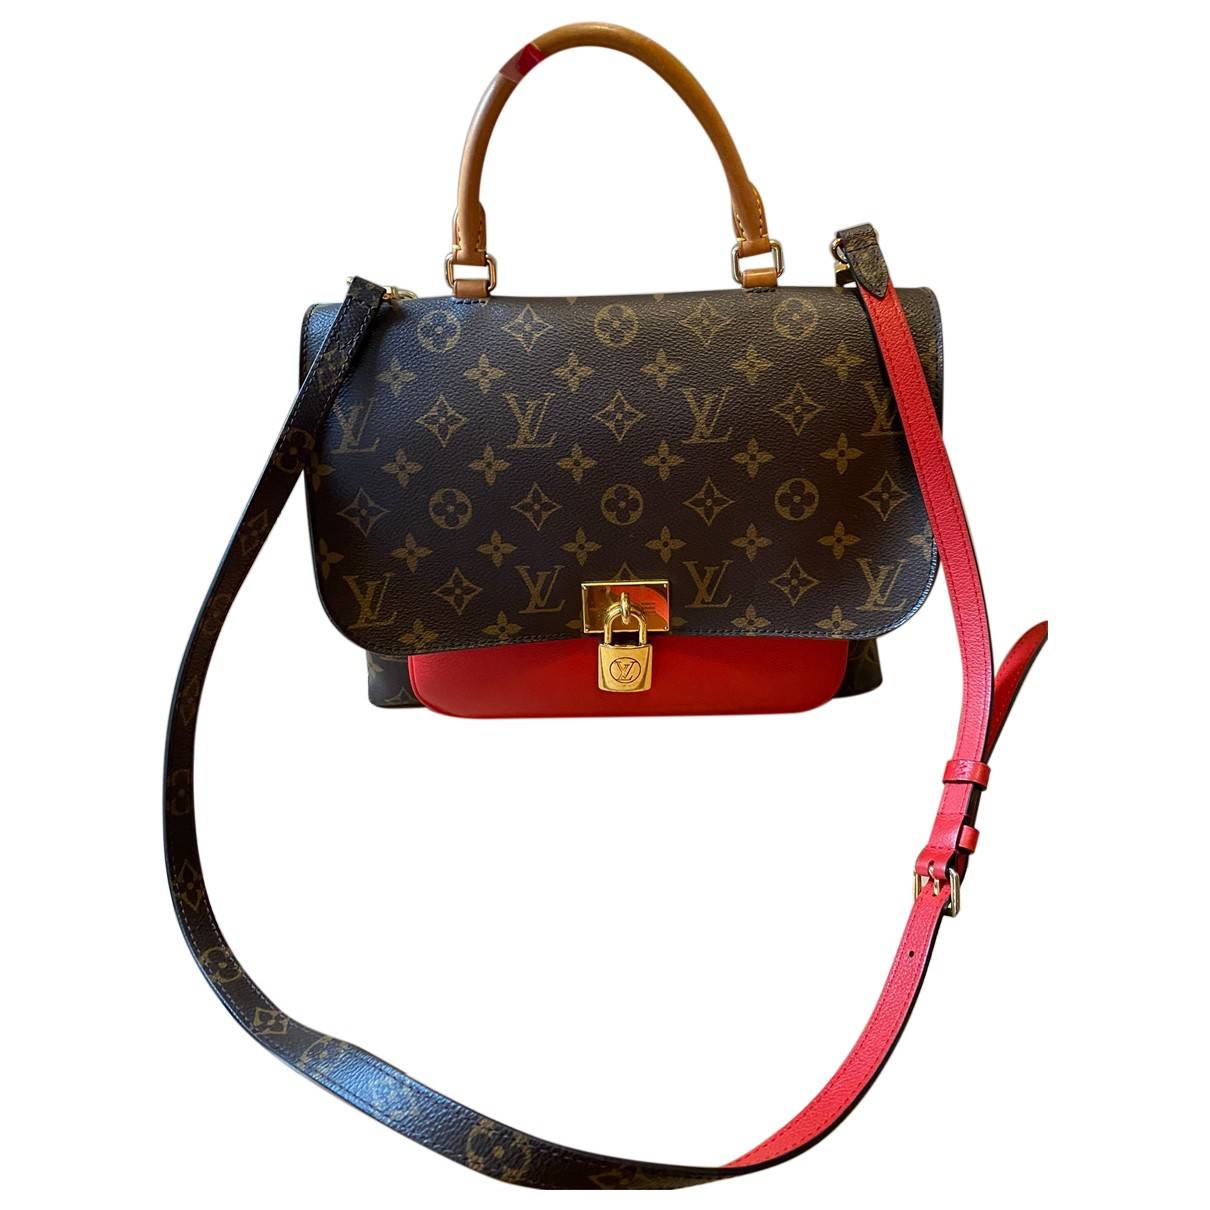 Marignan Louis Vuitton Handbags for Women - Vestiaire Collective